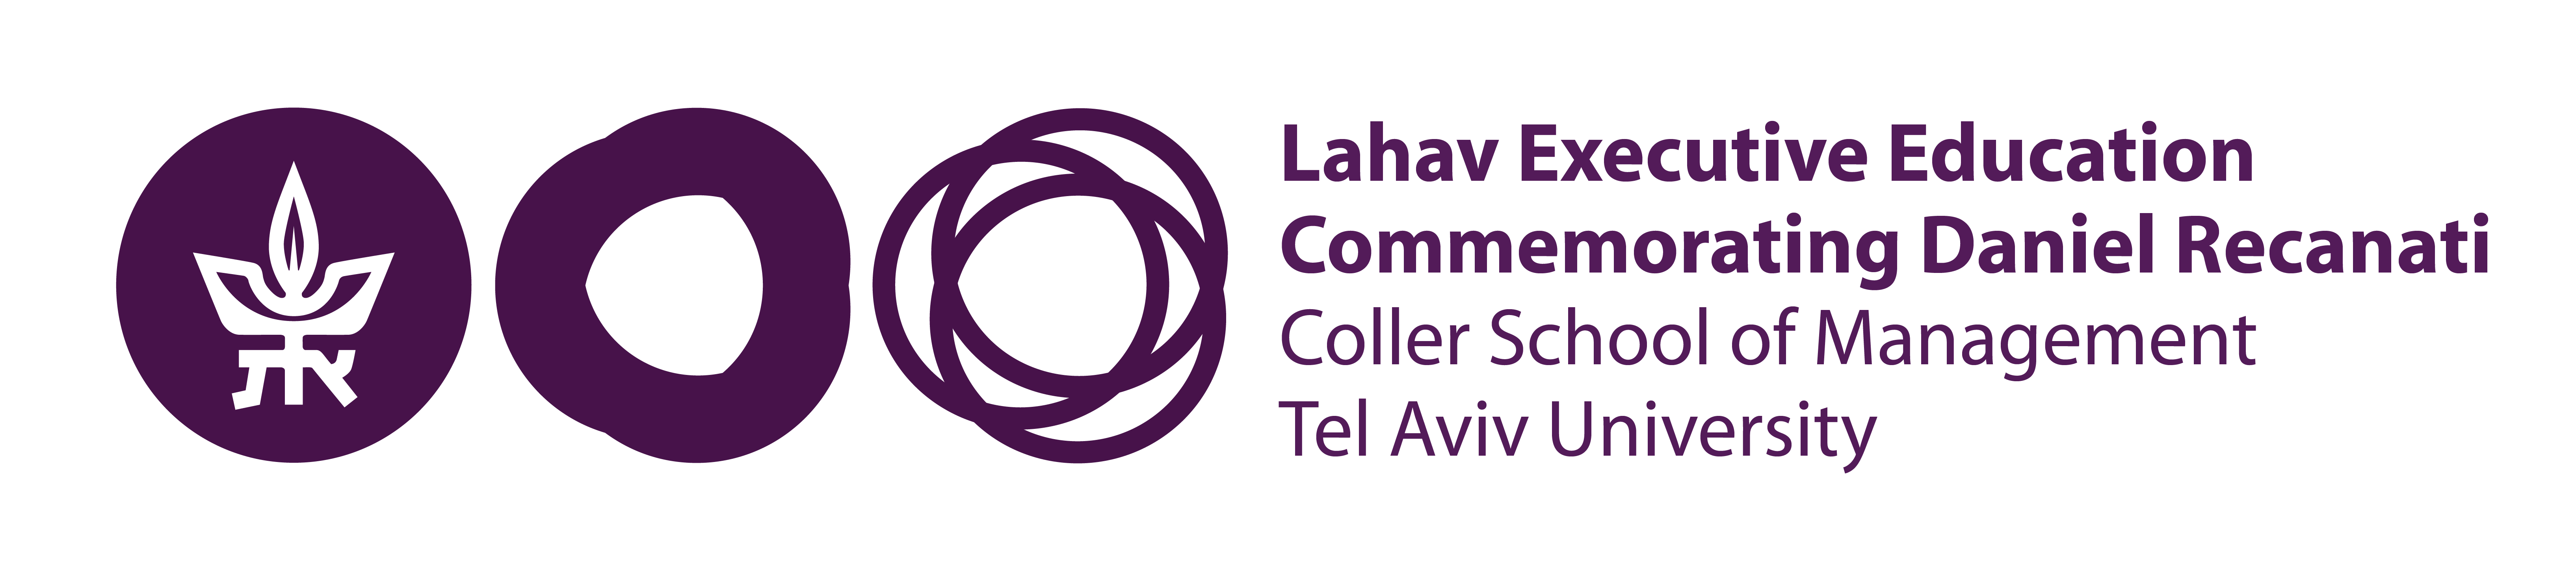 Lahav Executive Education